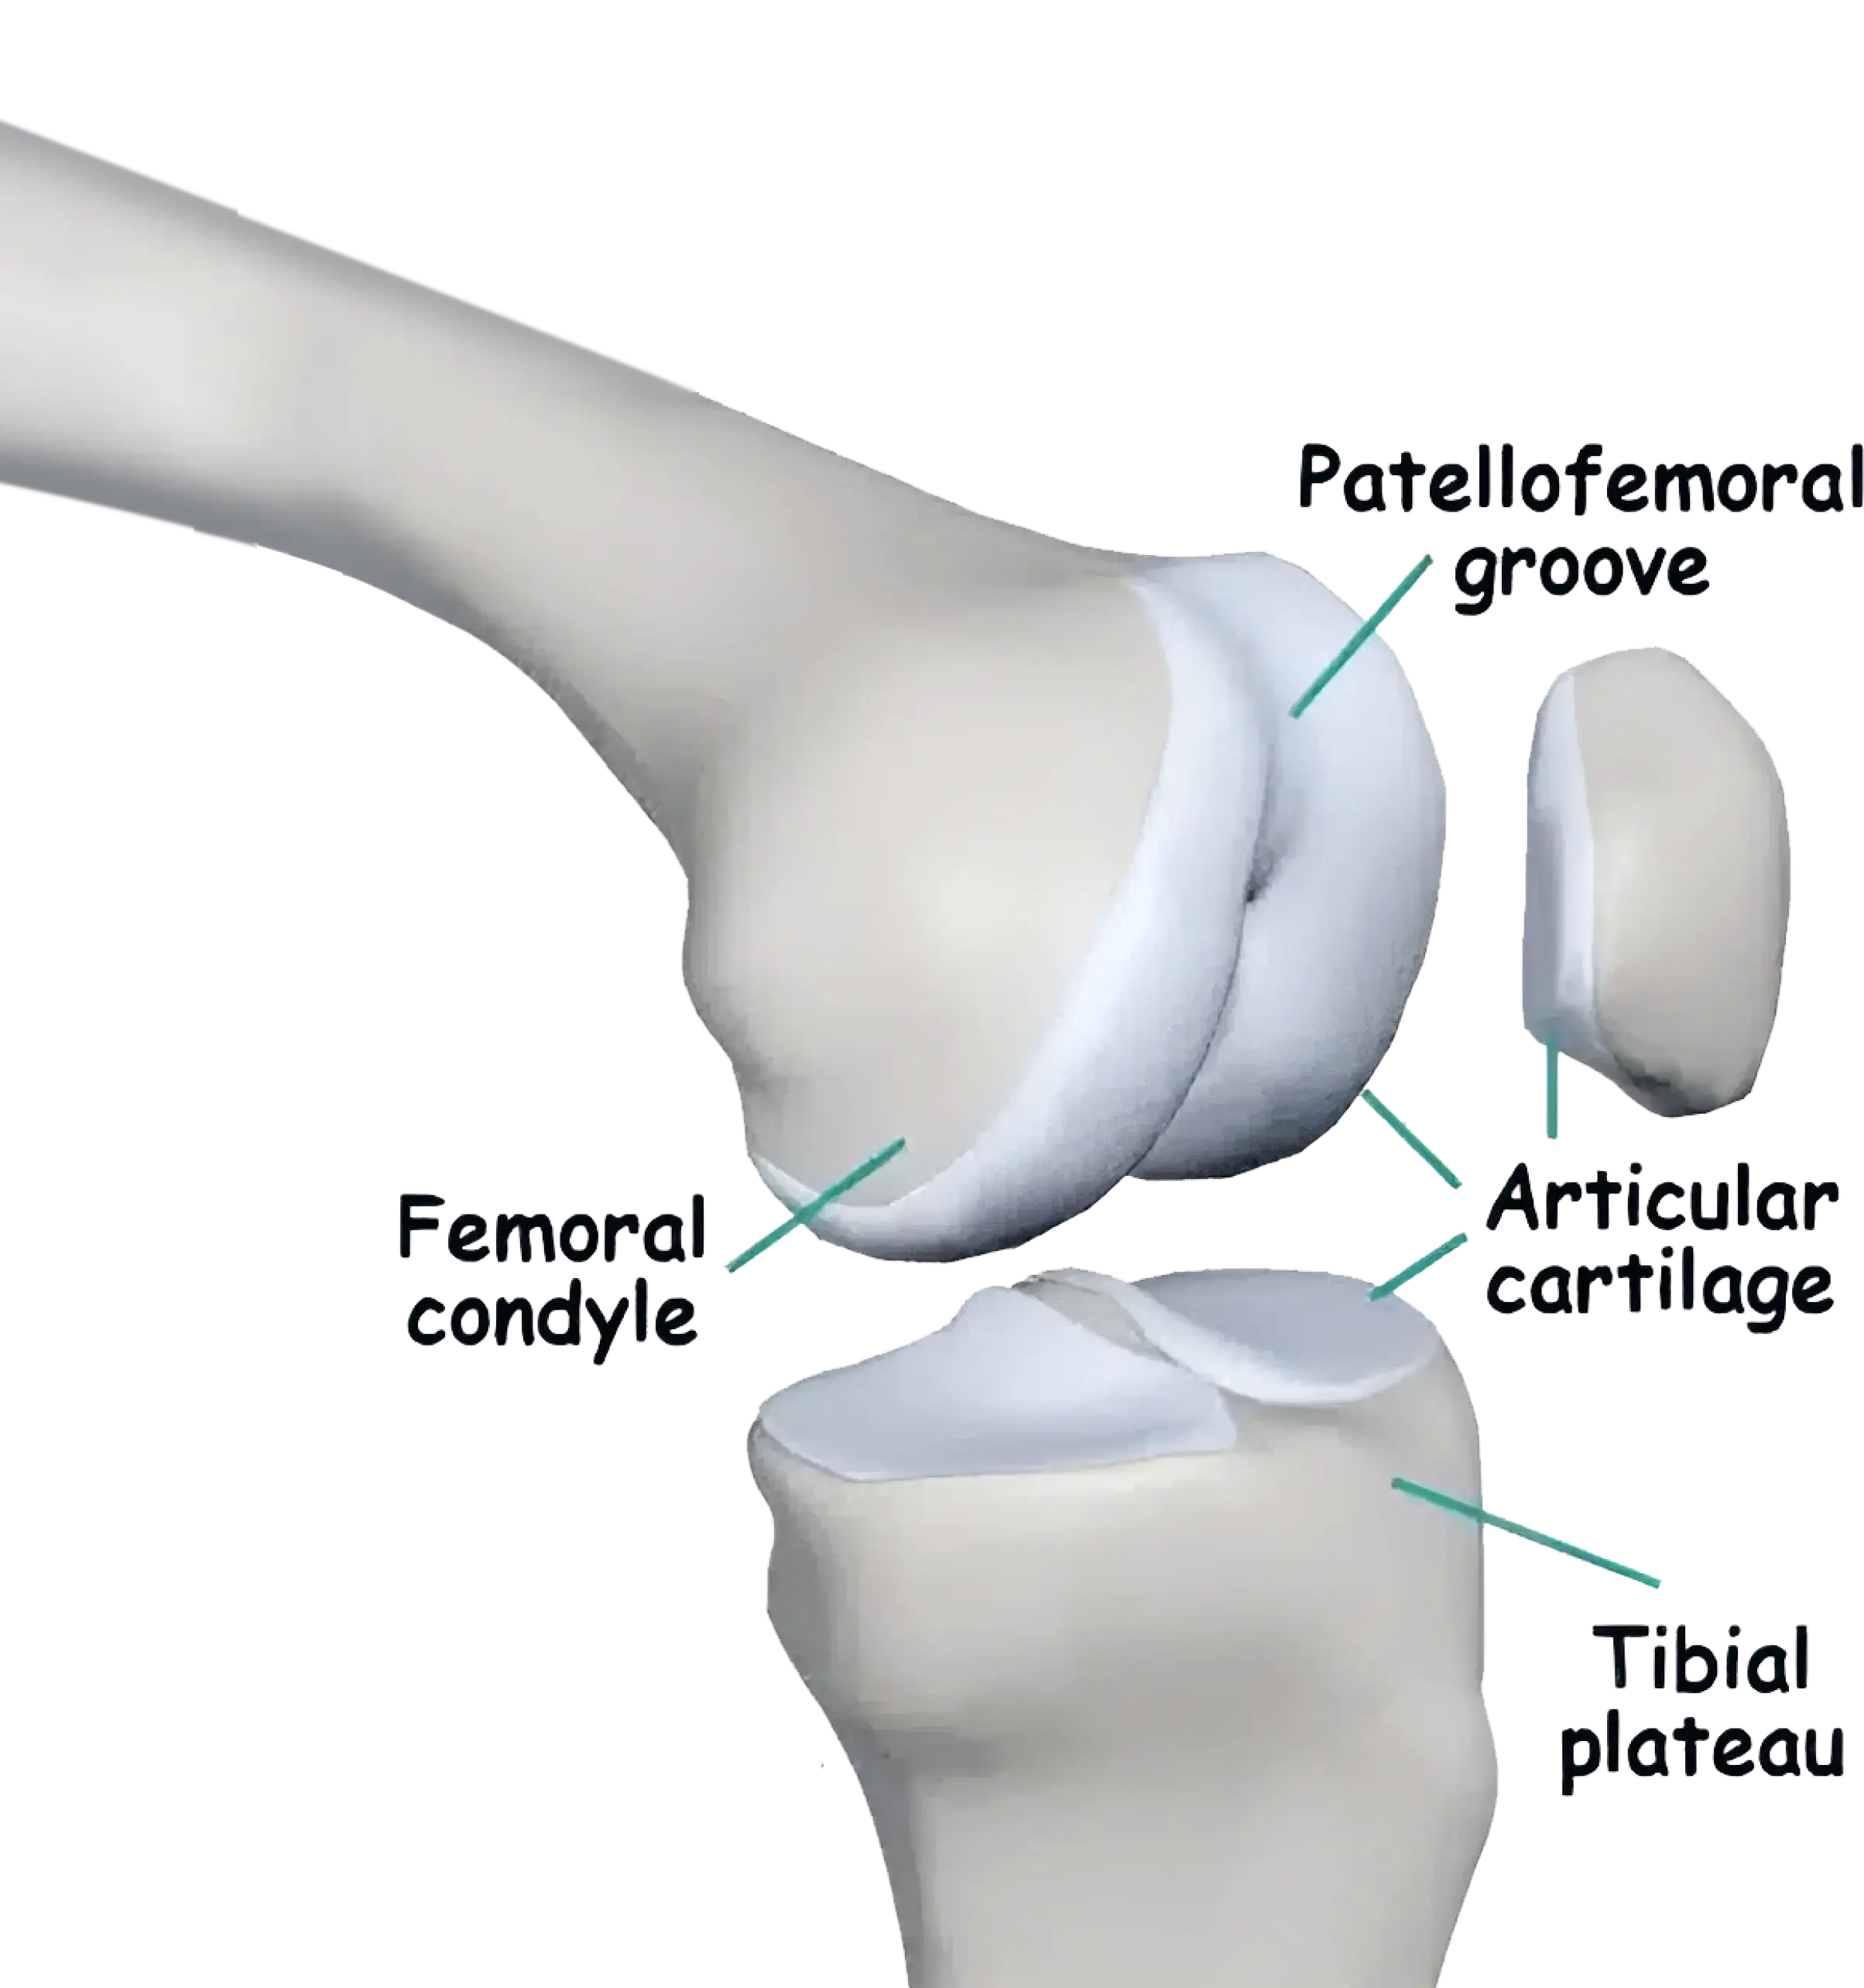 articular cartilage image